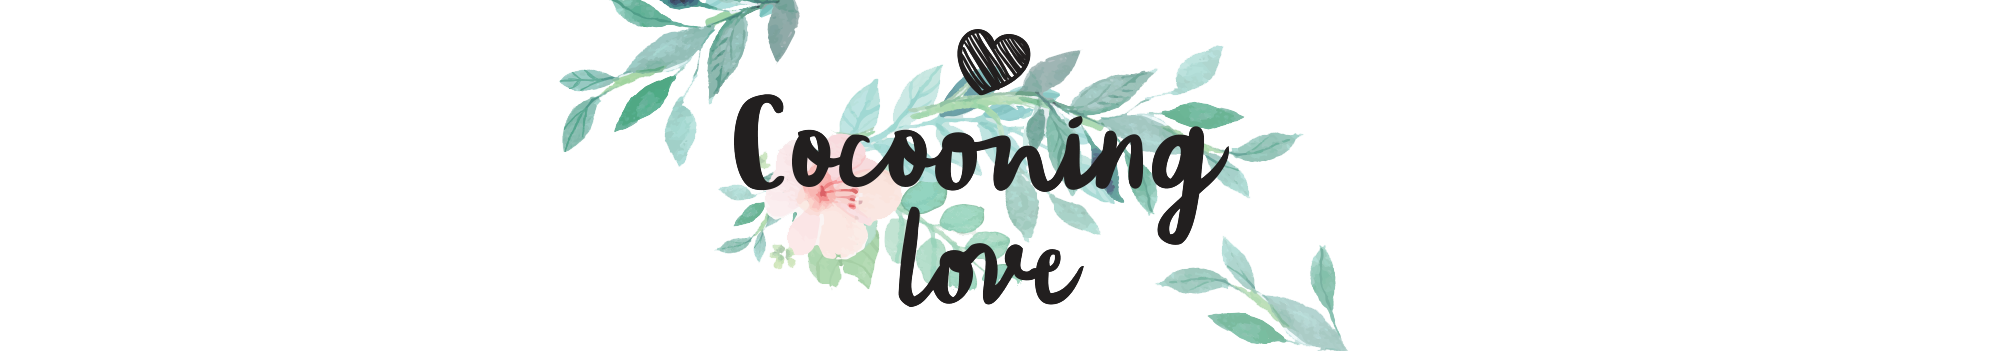 cocooning-love-banniere-logo